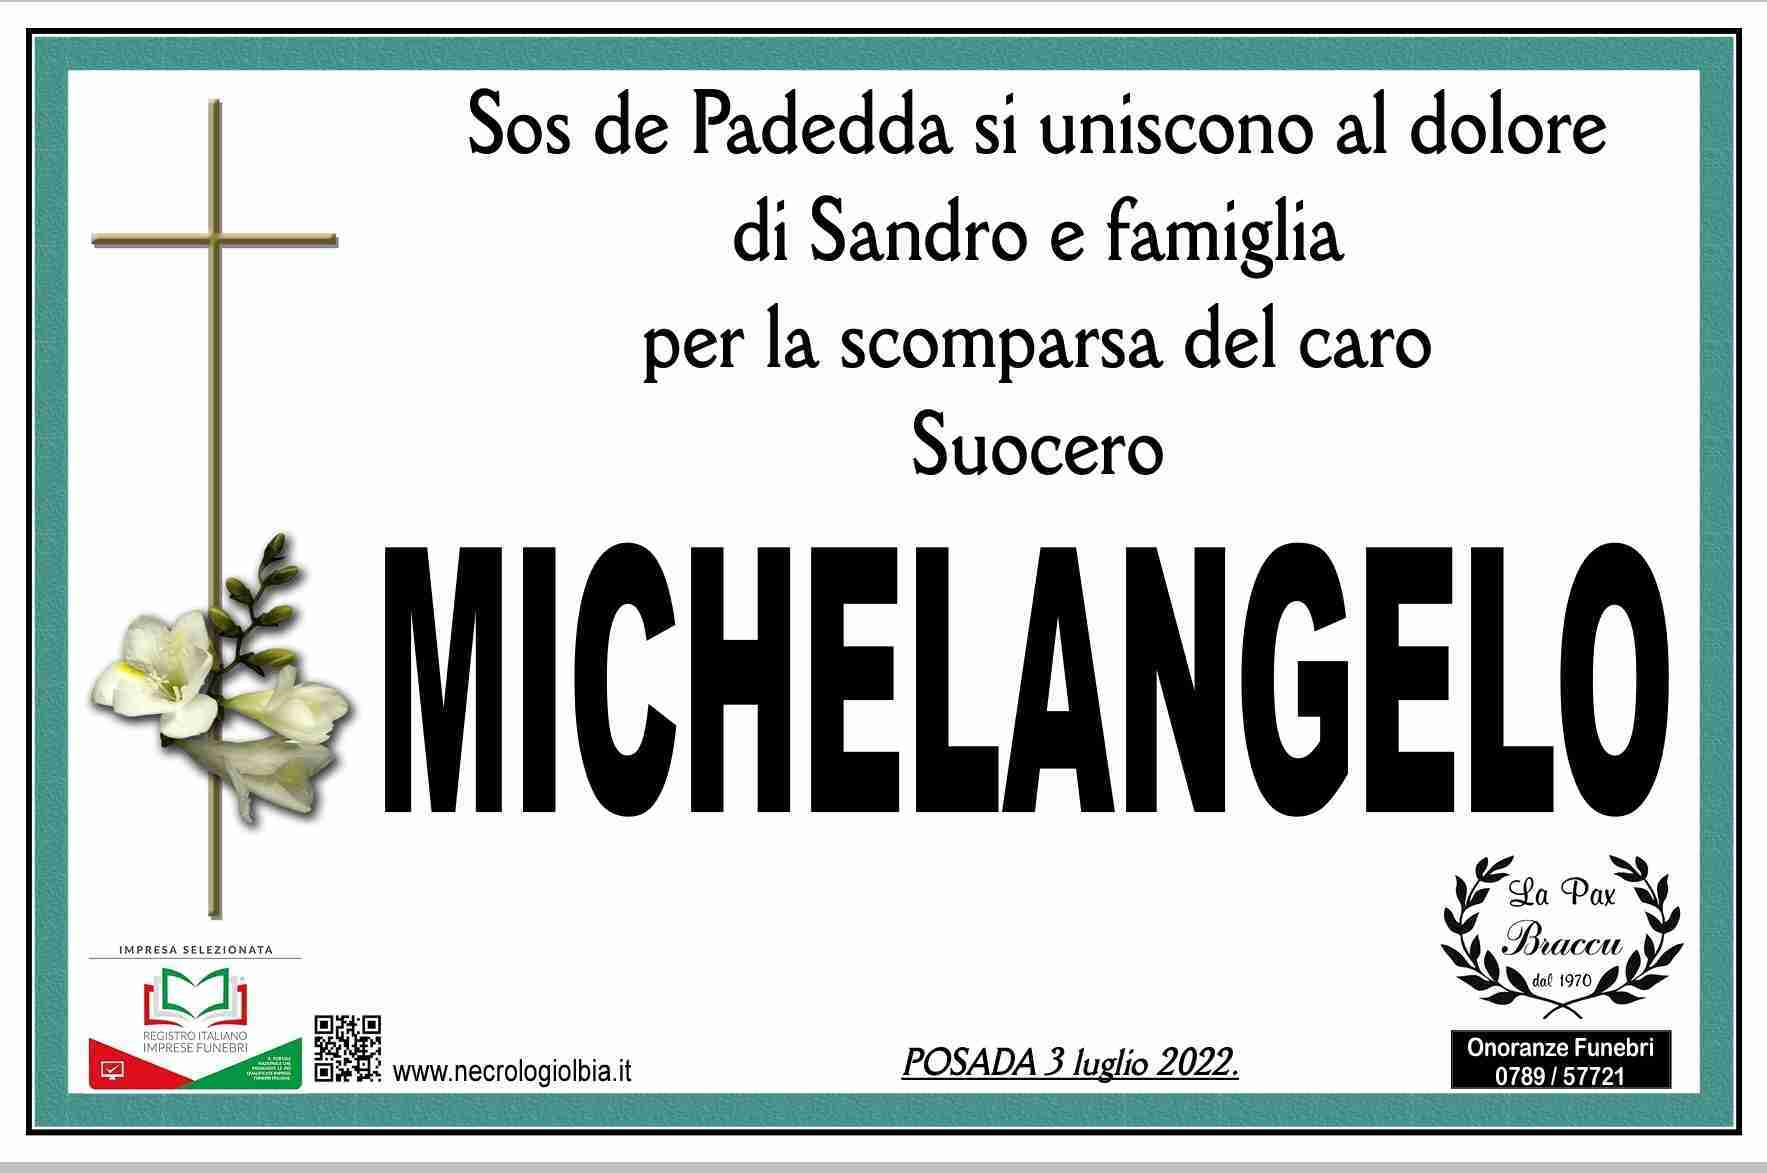 Michelangelo Selis